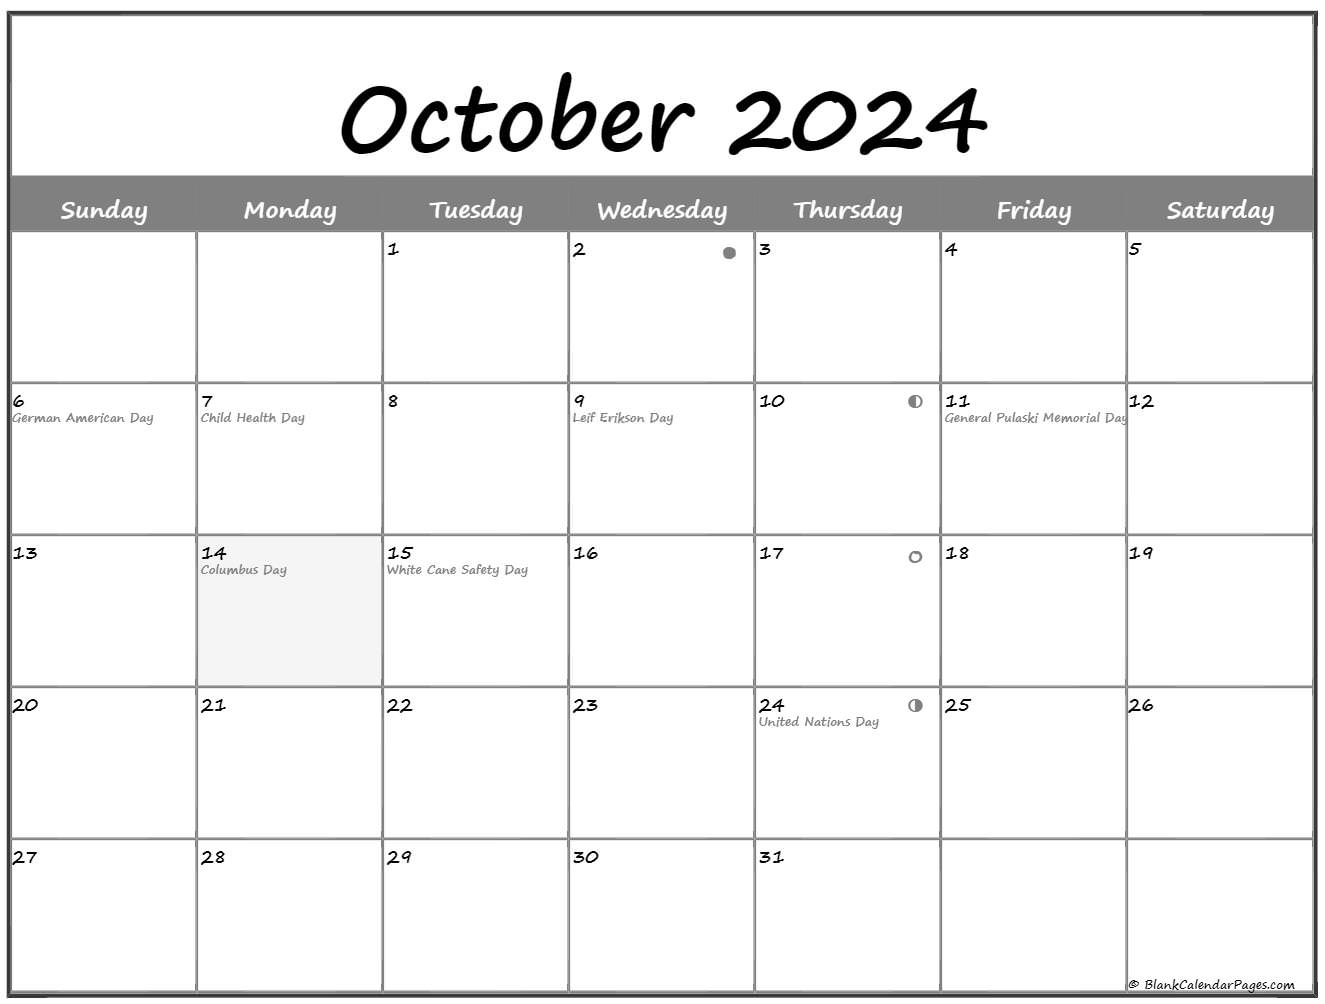 October 2022 Lunar Calendar Moon Phase Calendar